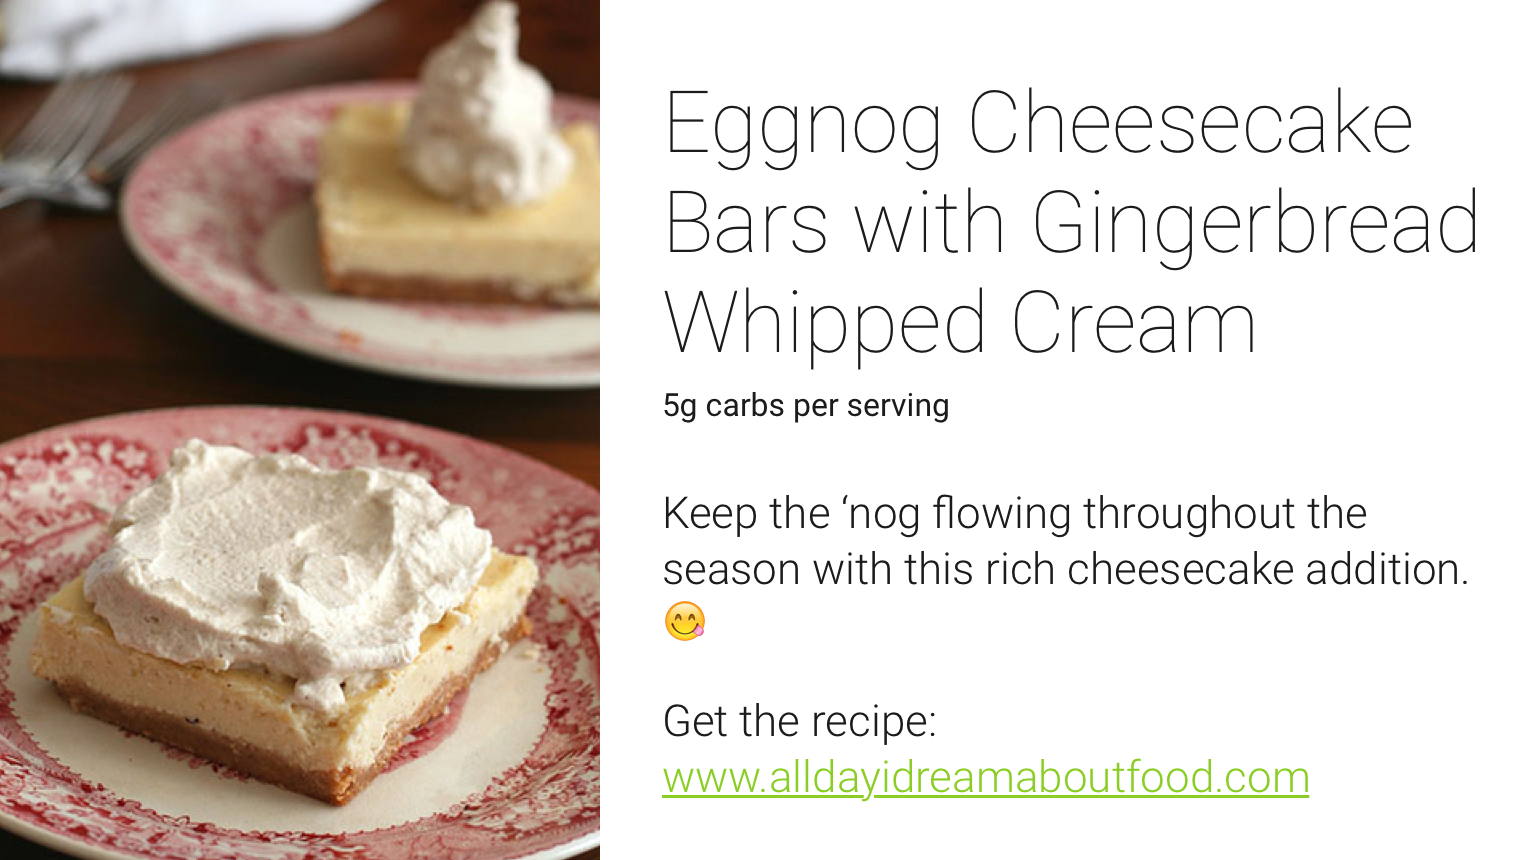 one drop holiday recipes - eggnong cheesecake bars